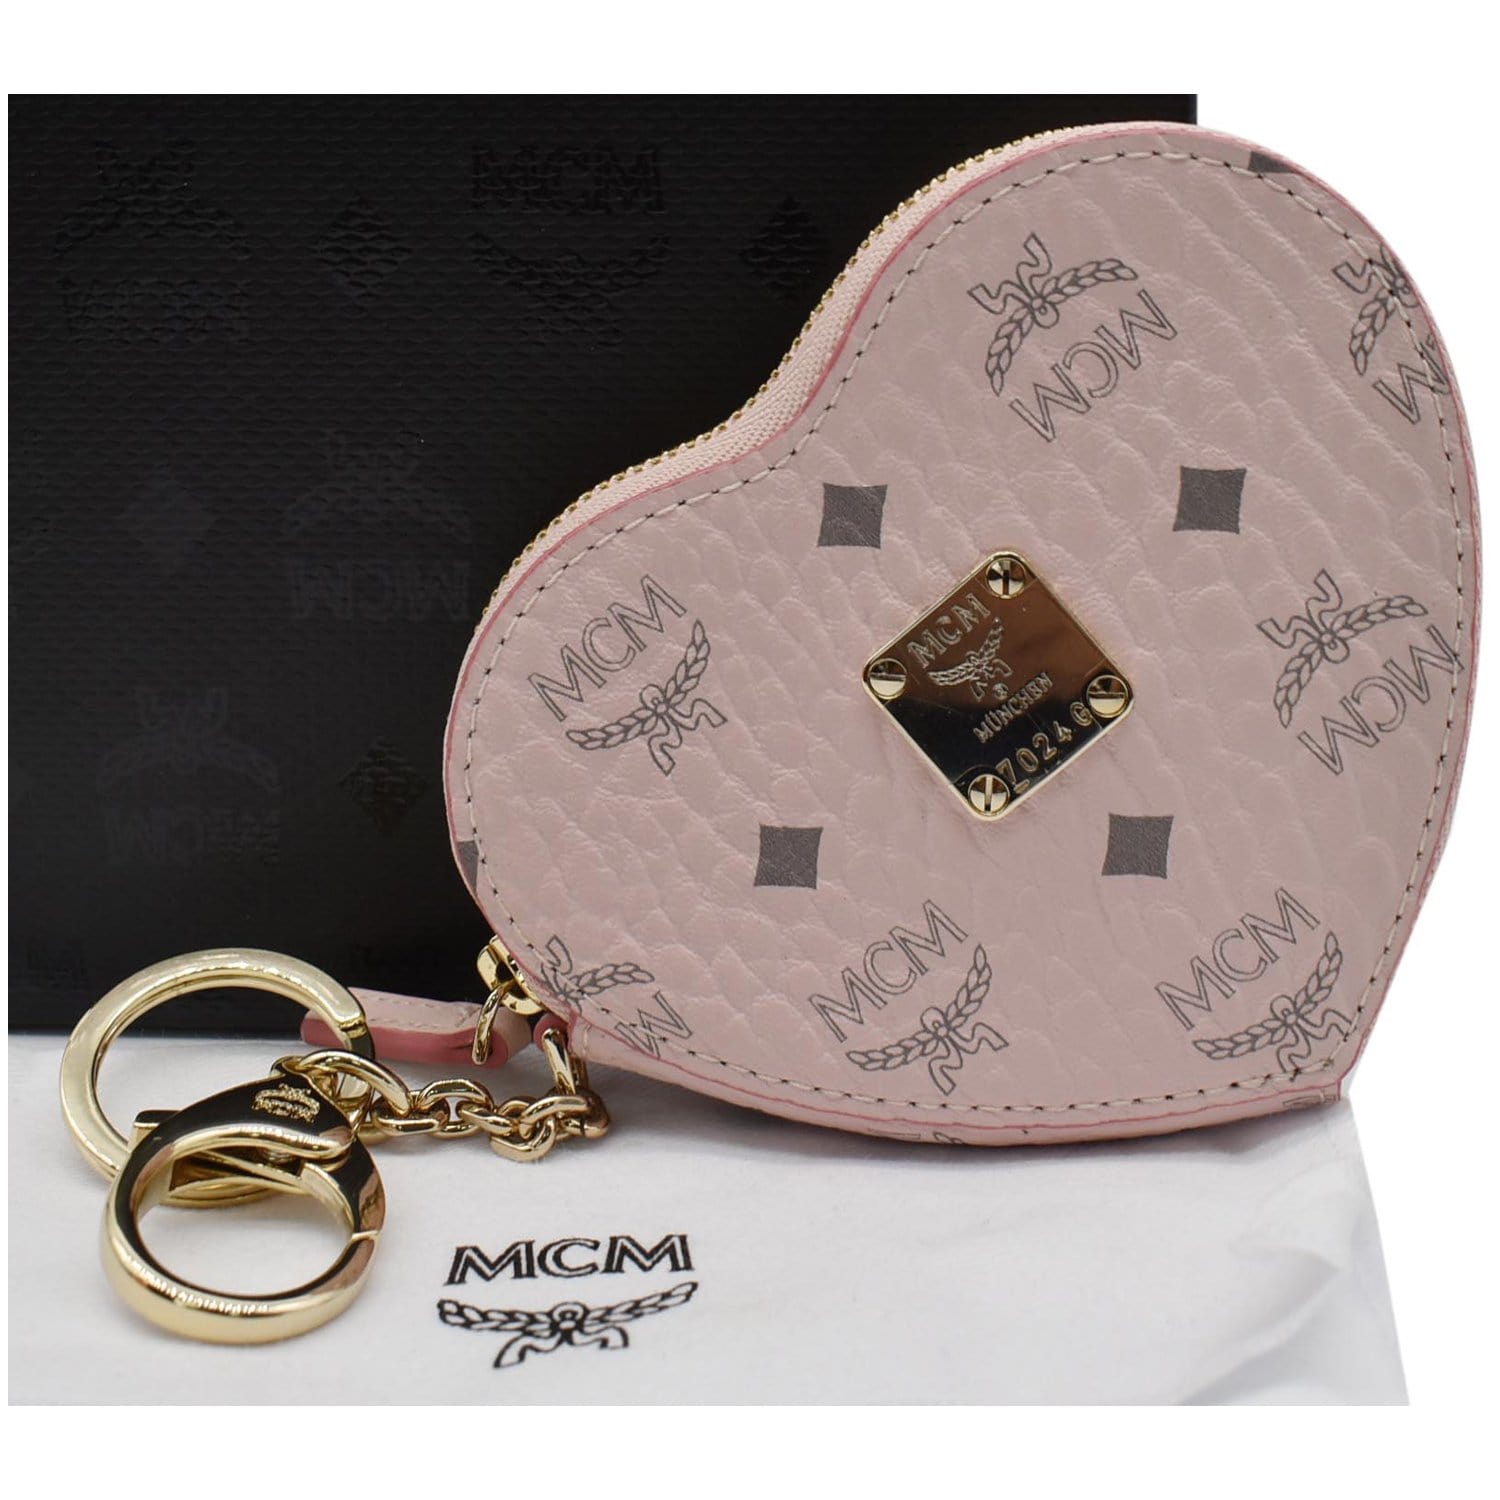 Mcm Ladies Heart Coin Pouch Charm Wallet MYIASDQ01QG001 8809630700715 -  Jomashop